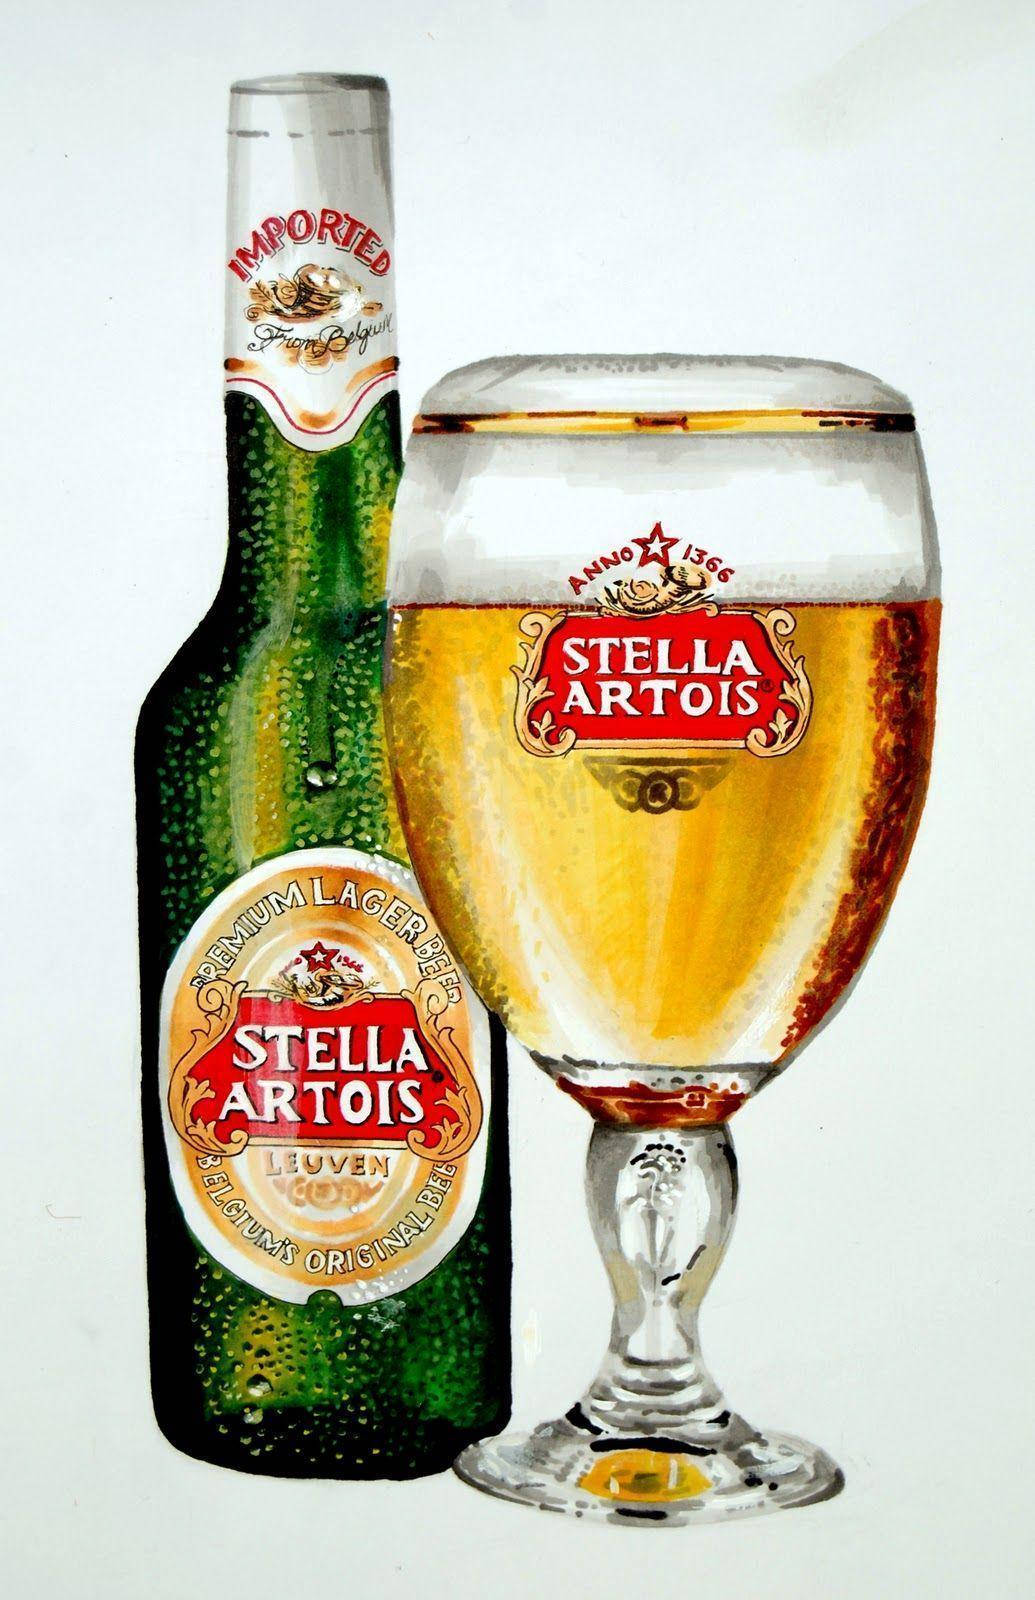 "Refreshing Moment with Stella Artois" Wallpaper